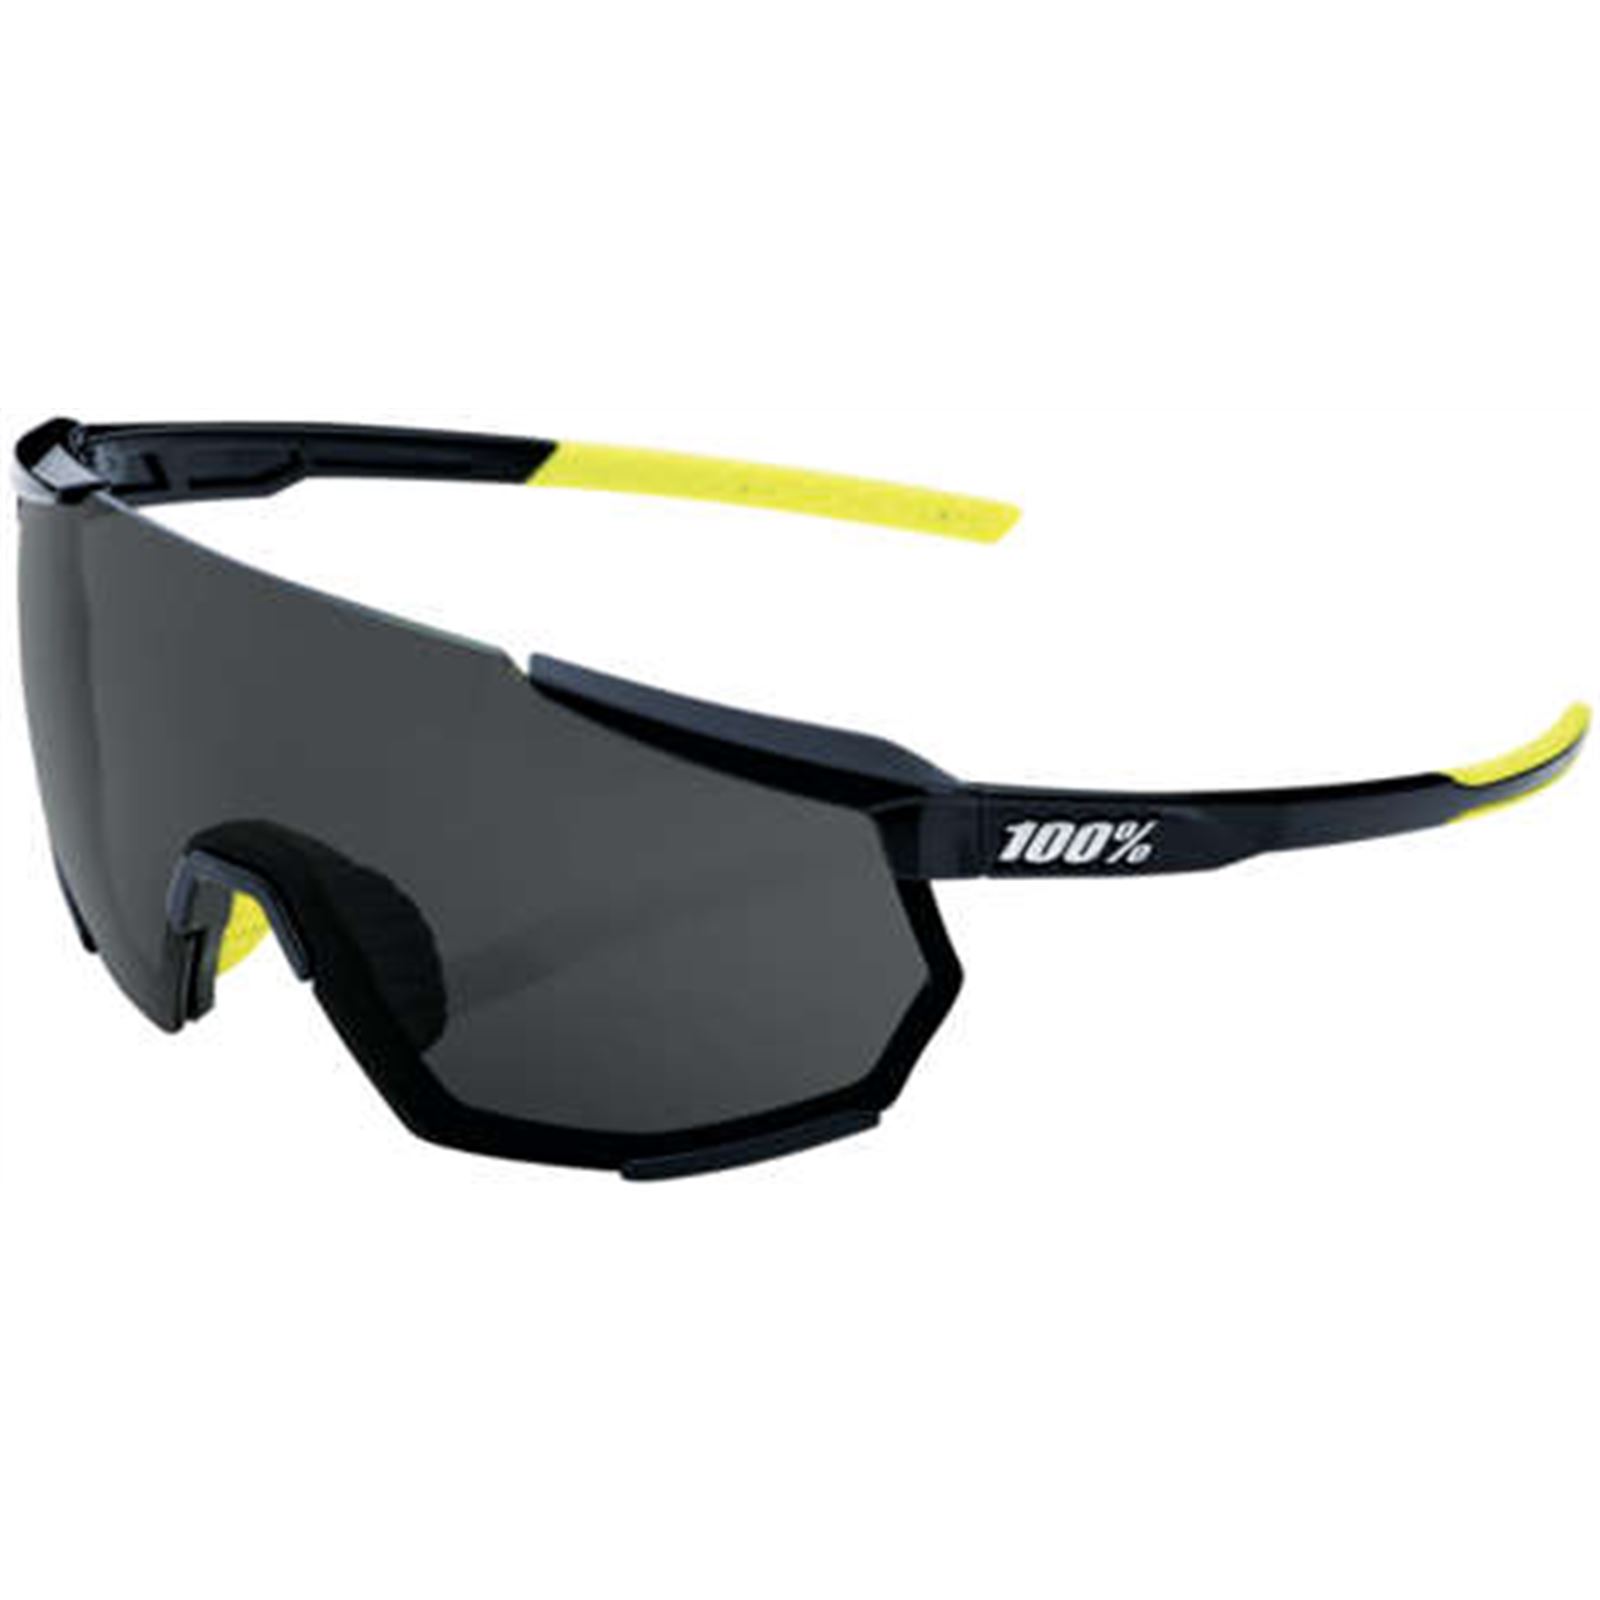 100% Racetrap 3.0 Sunglasses Gloss Black with Smoke Lens